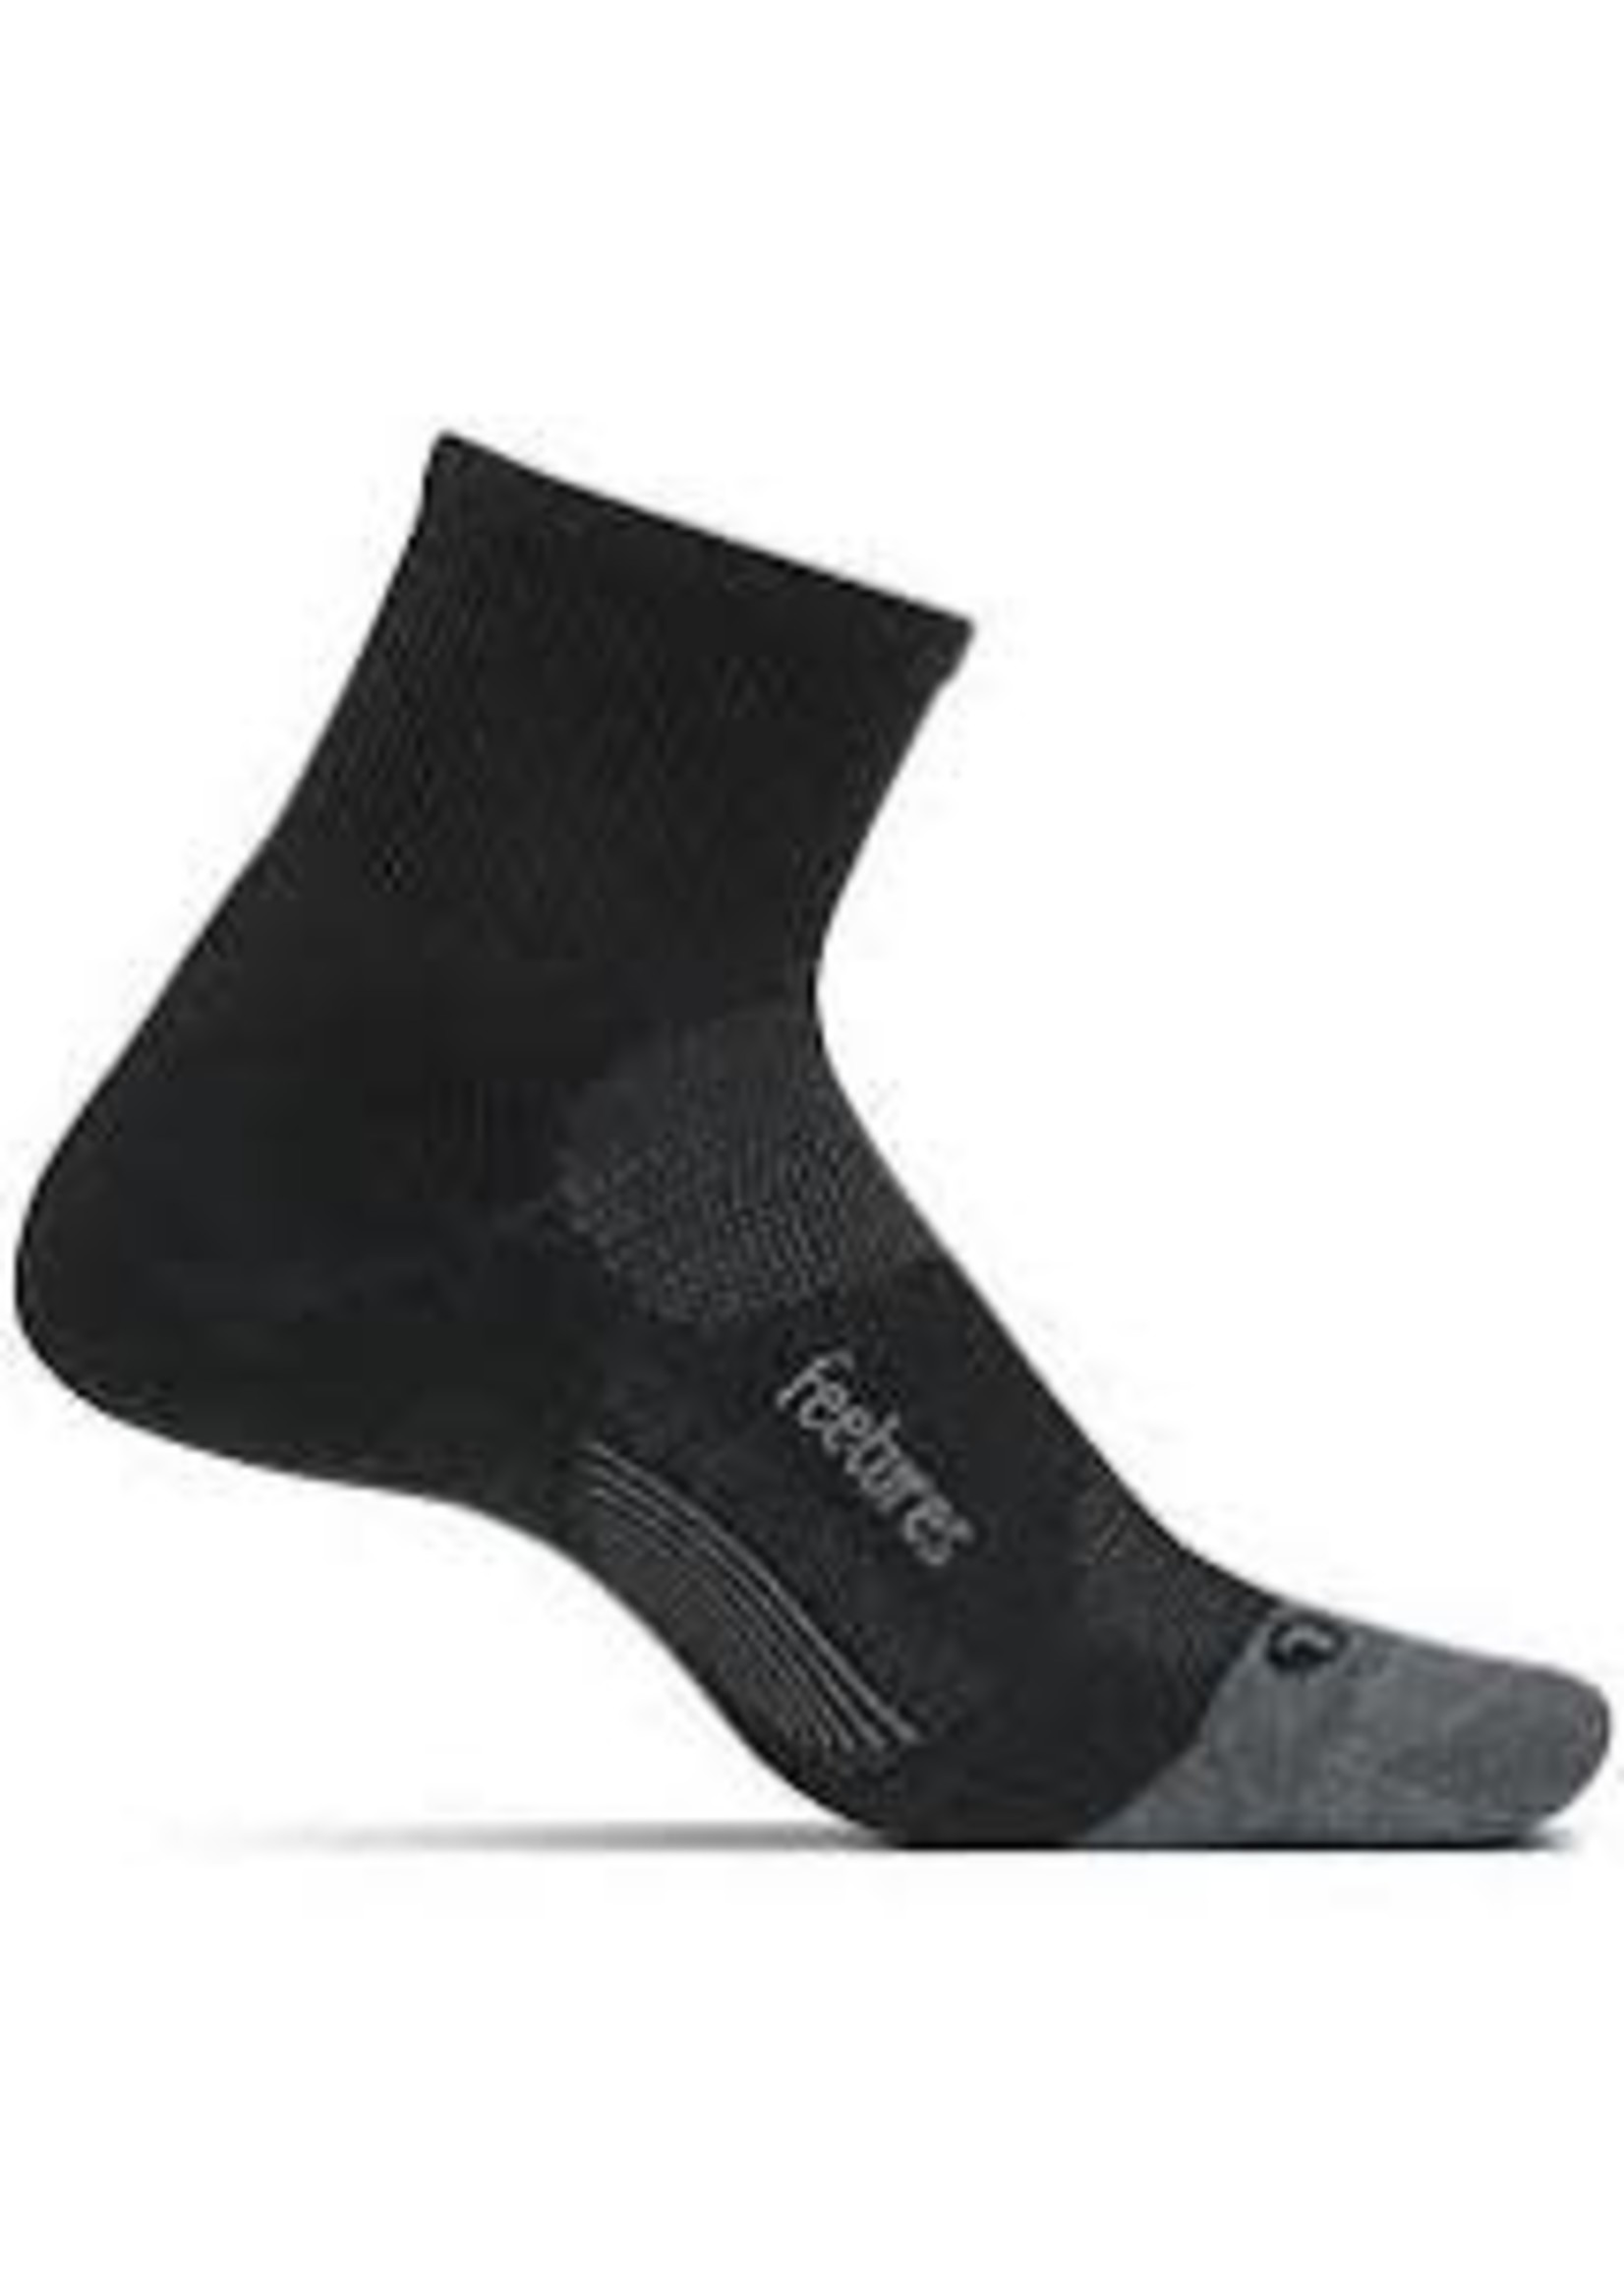 Feetures Socks Feetures Merino 10 Cush Quarter